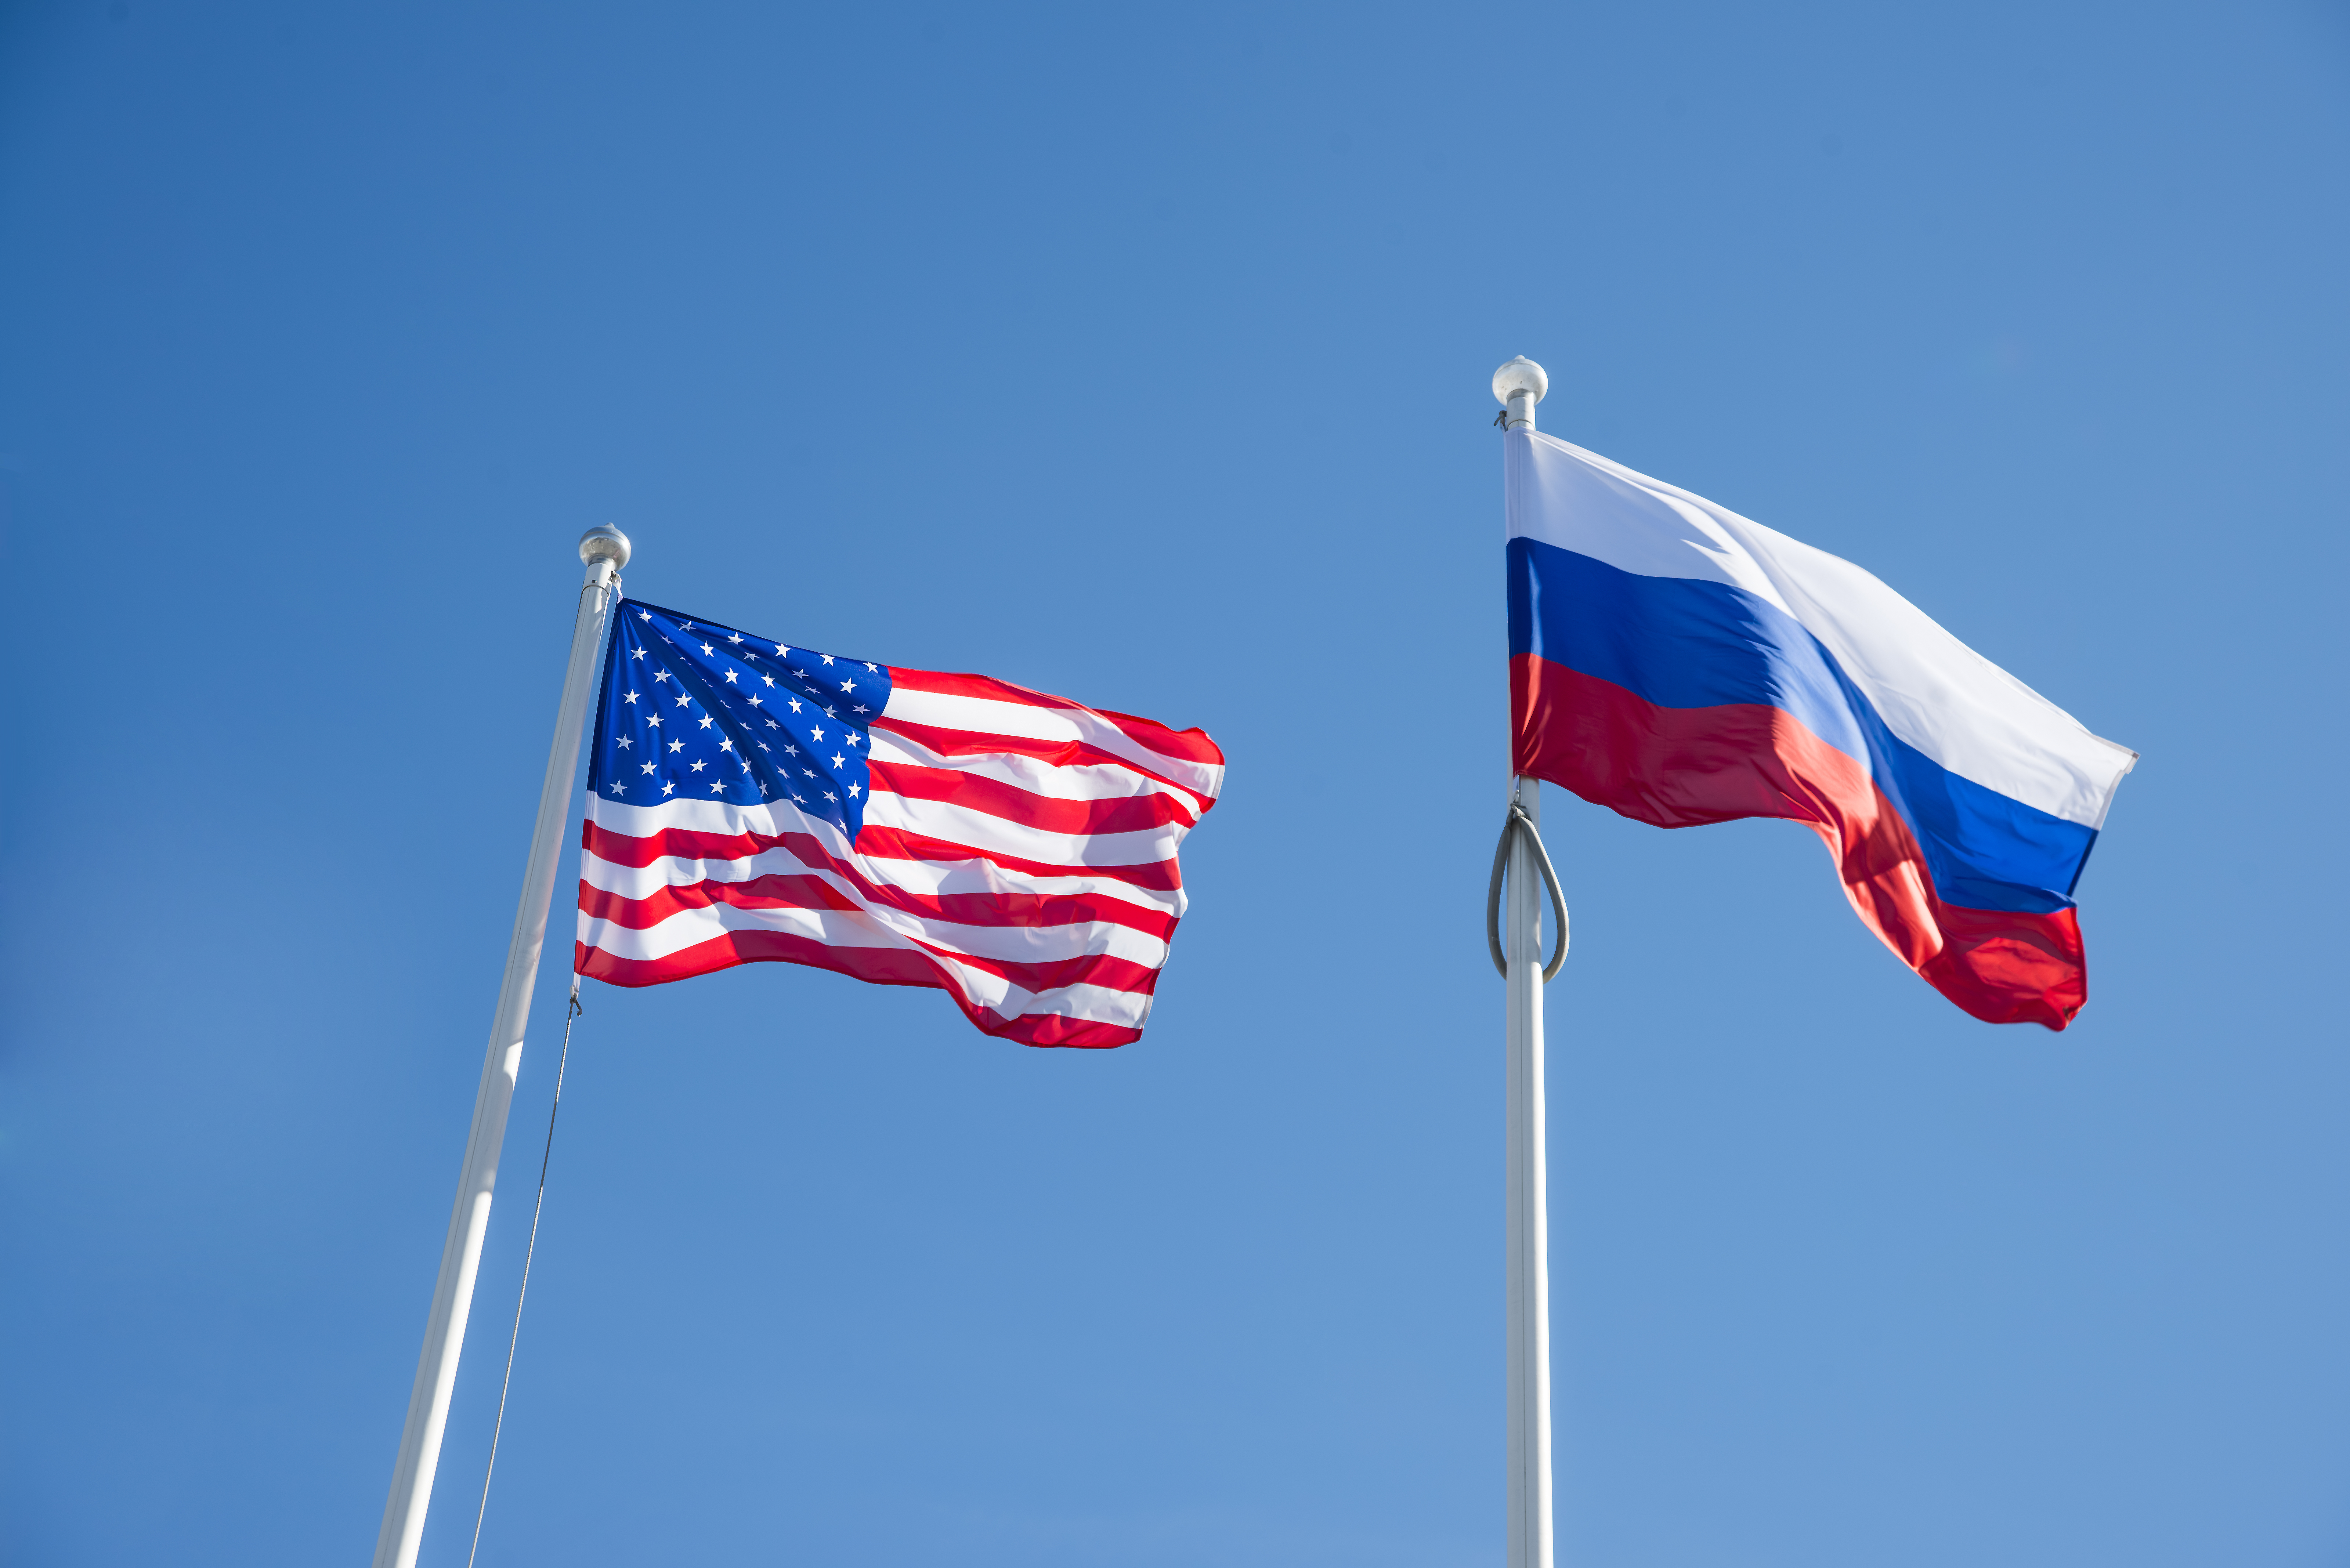 American in russia. США РФ флаг. Россия и США. Флаг России и США. Российский и американский флаги.